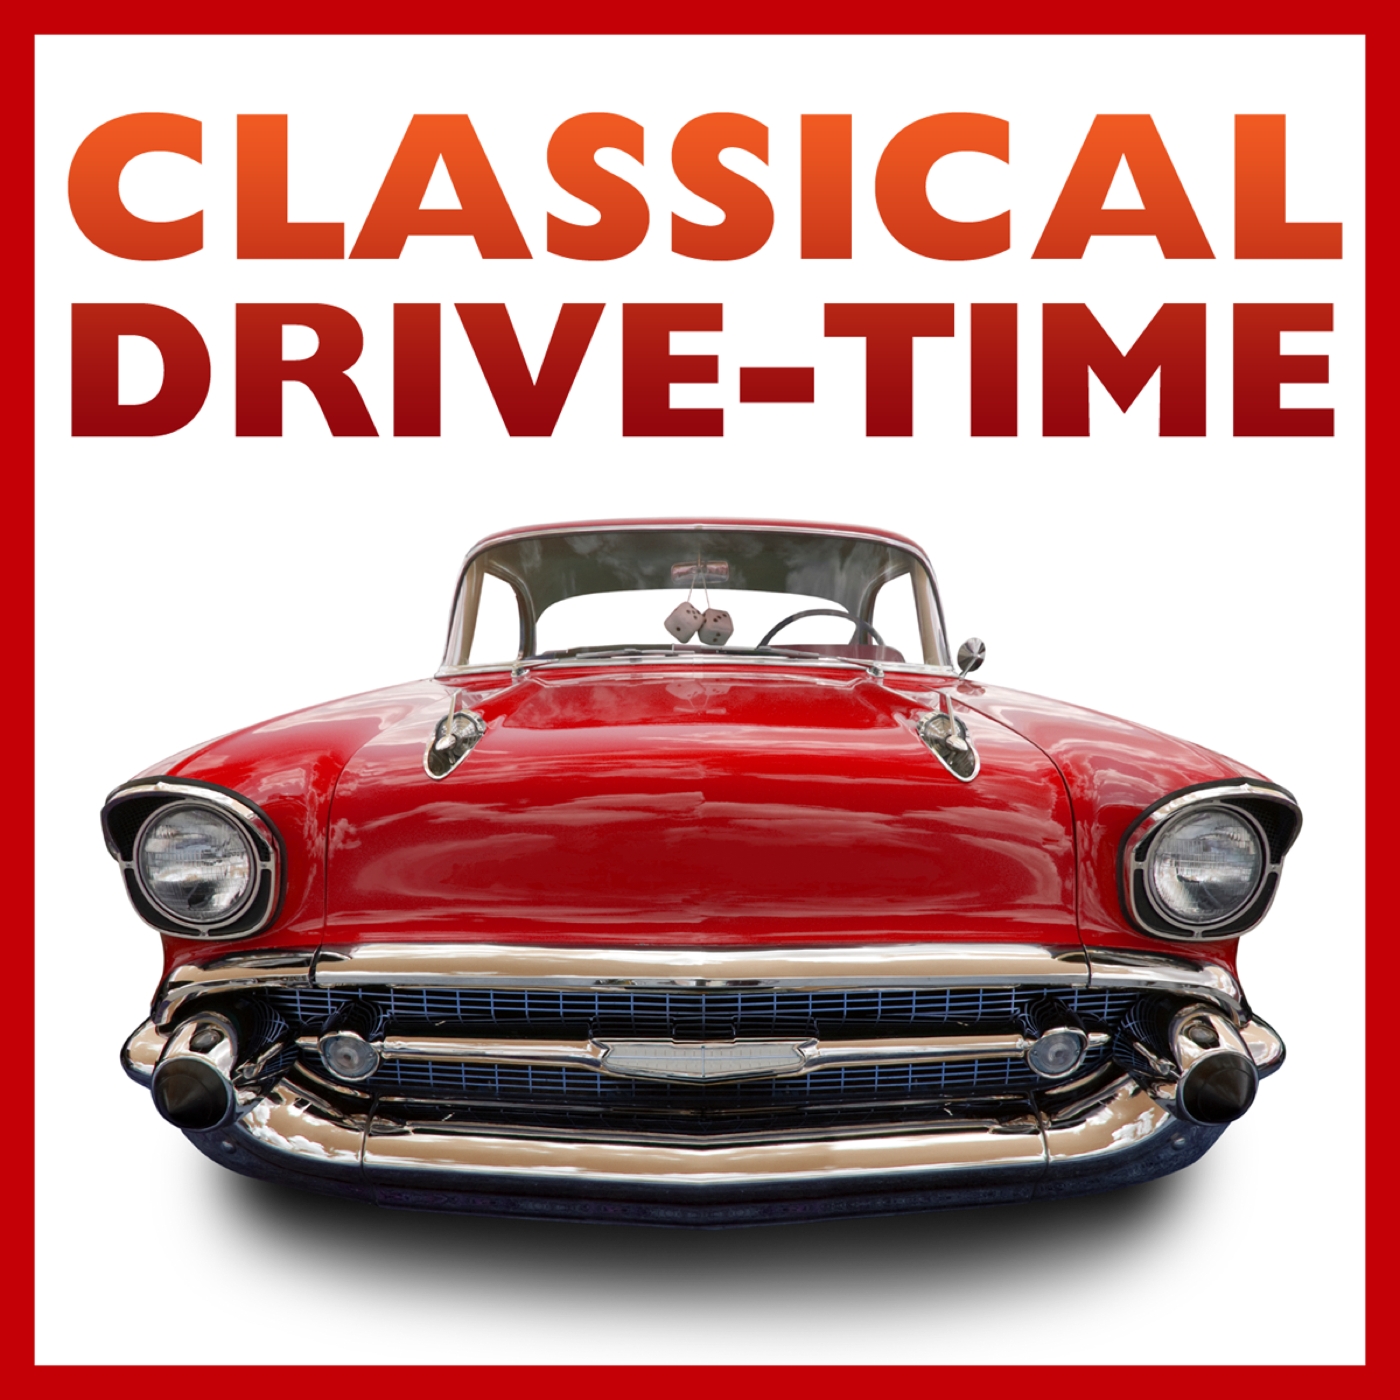 Classical Drivetime